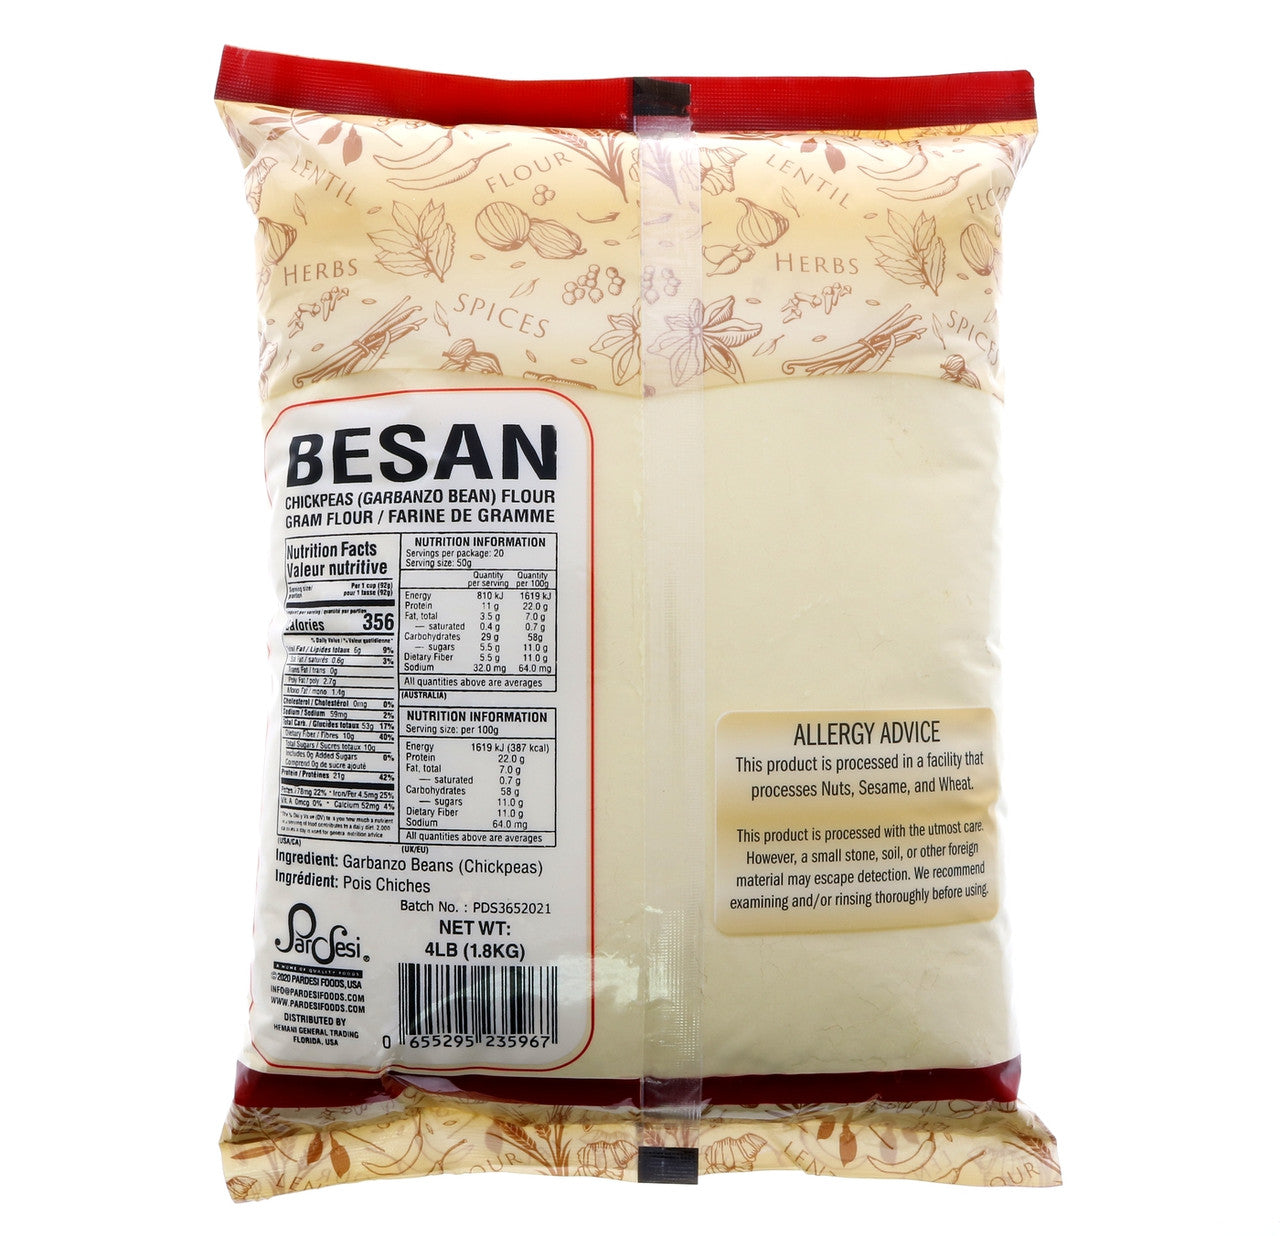 PARDESI Chickpeas Gram Flour Besan 4LB